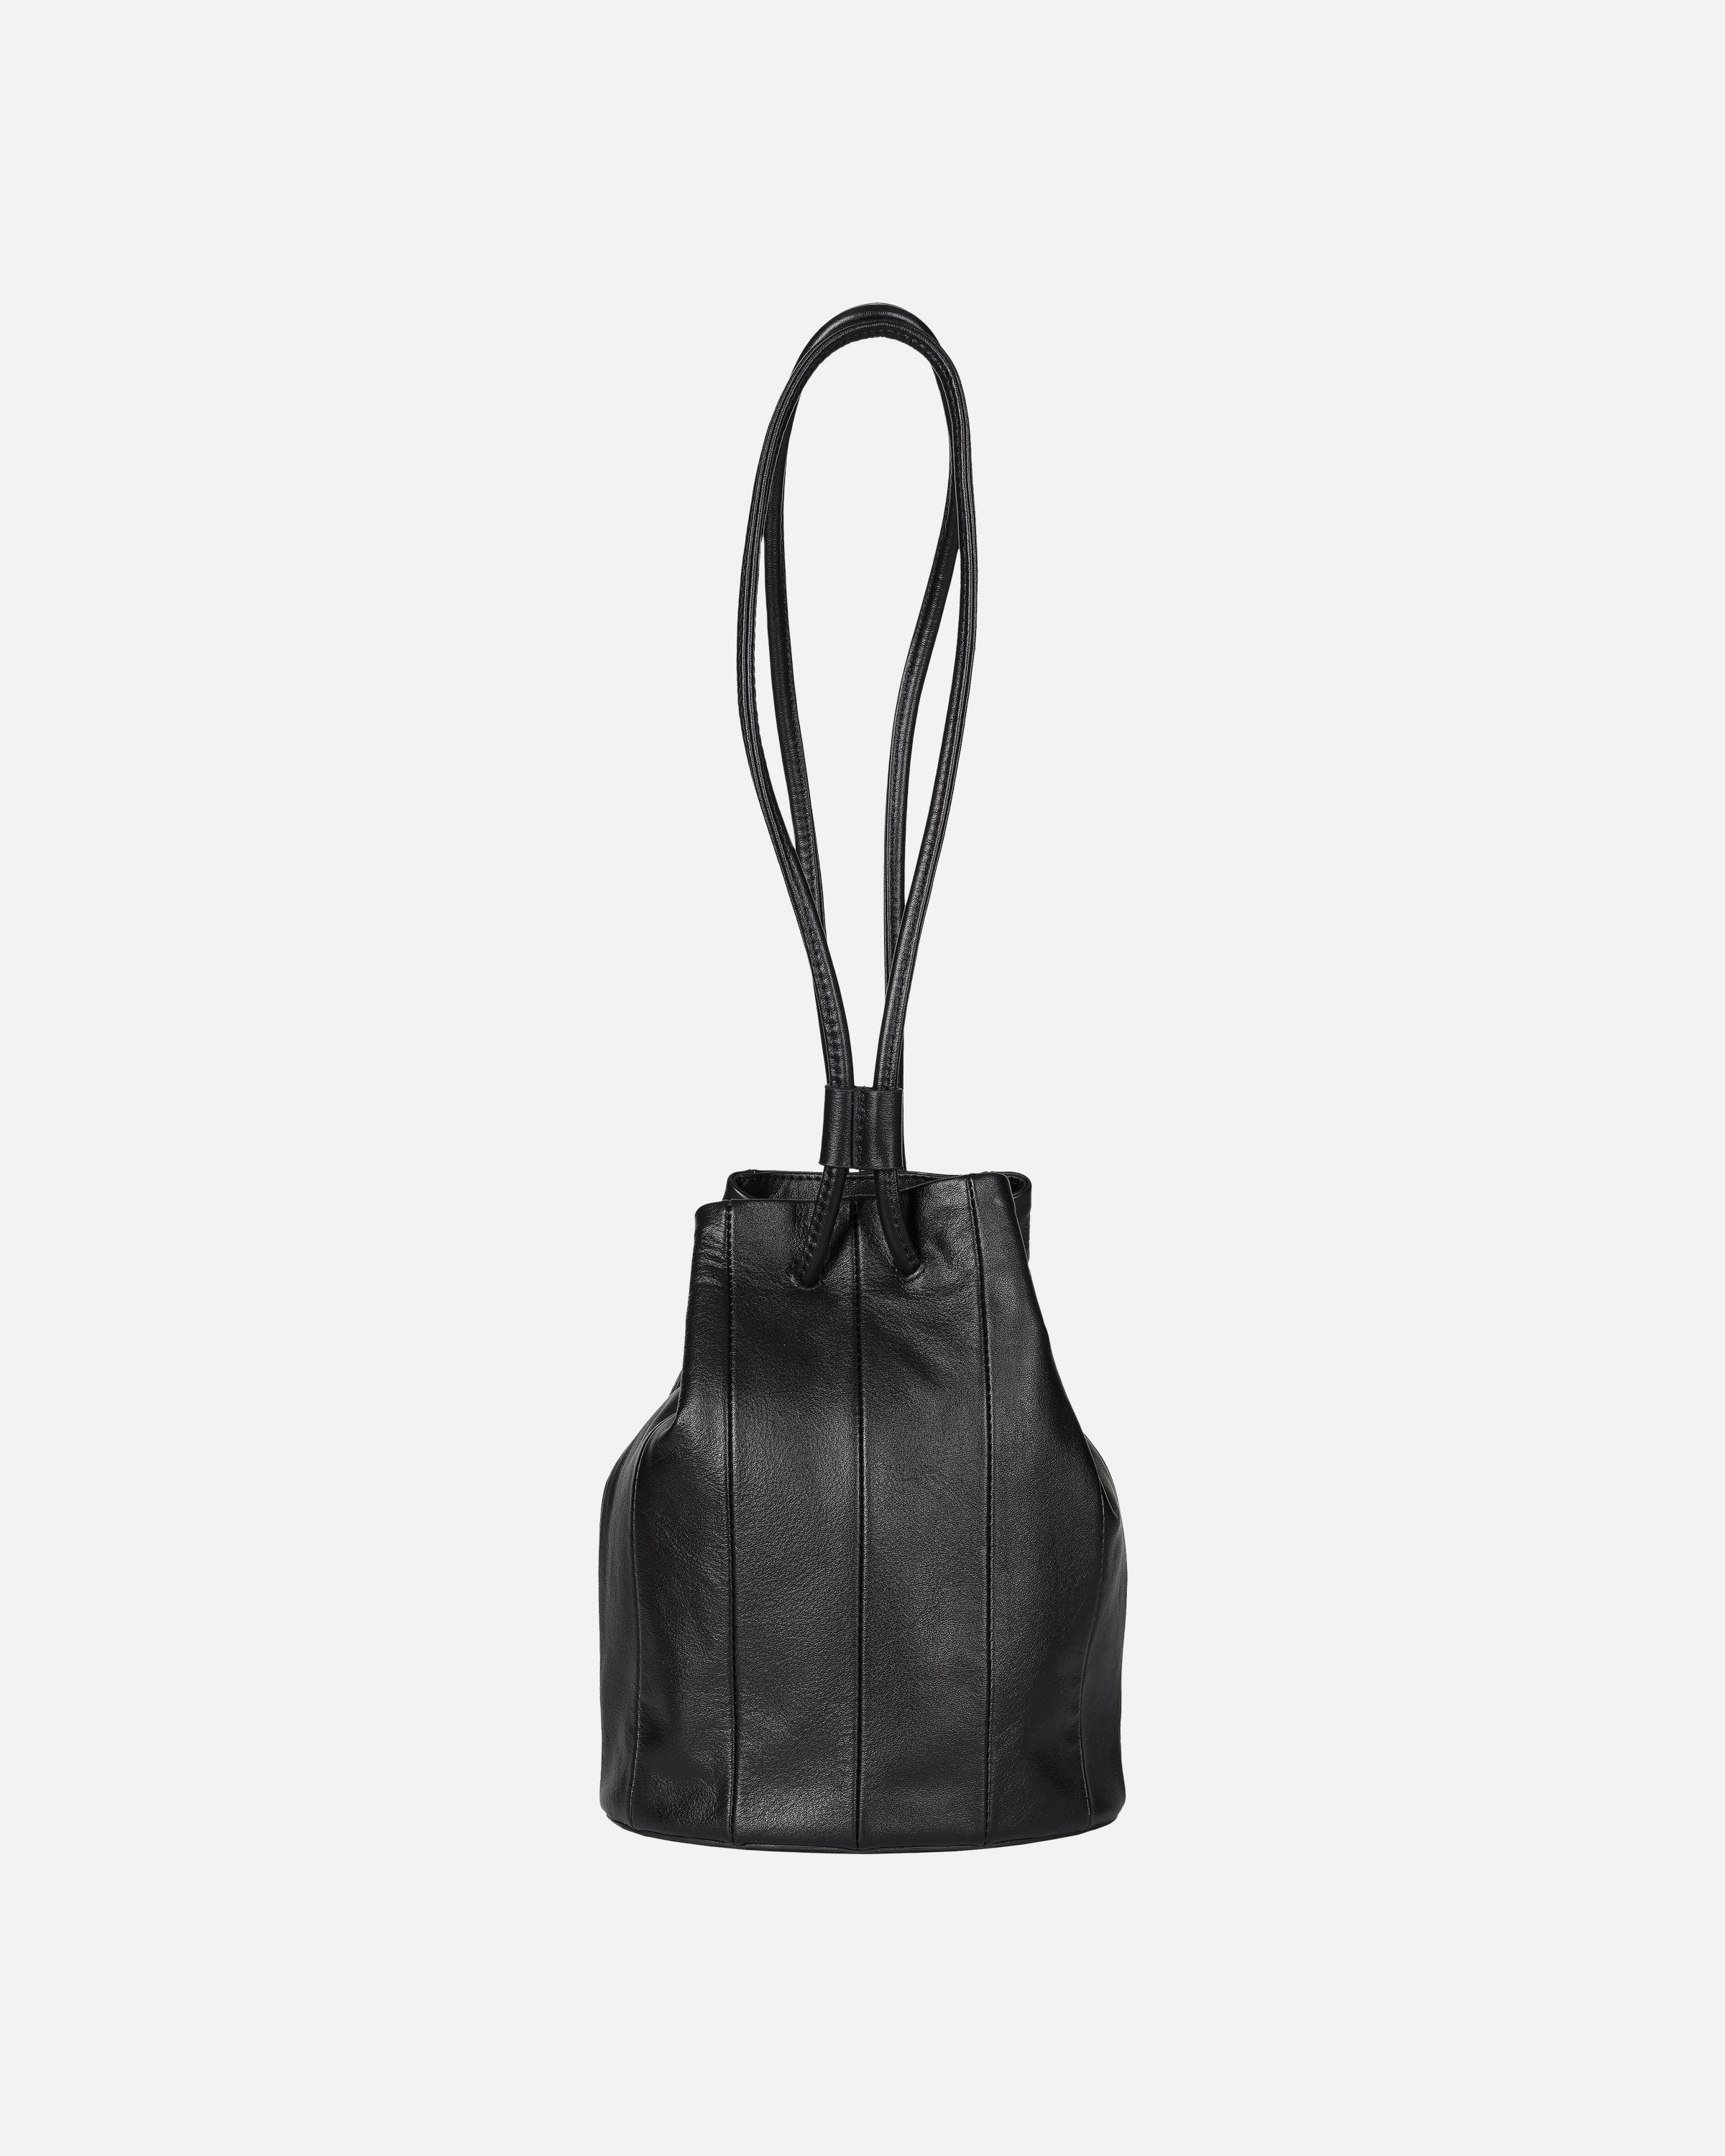 keira leather bag black - bag